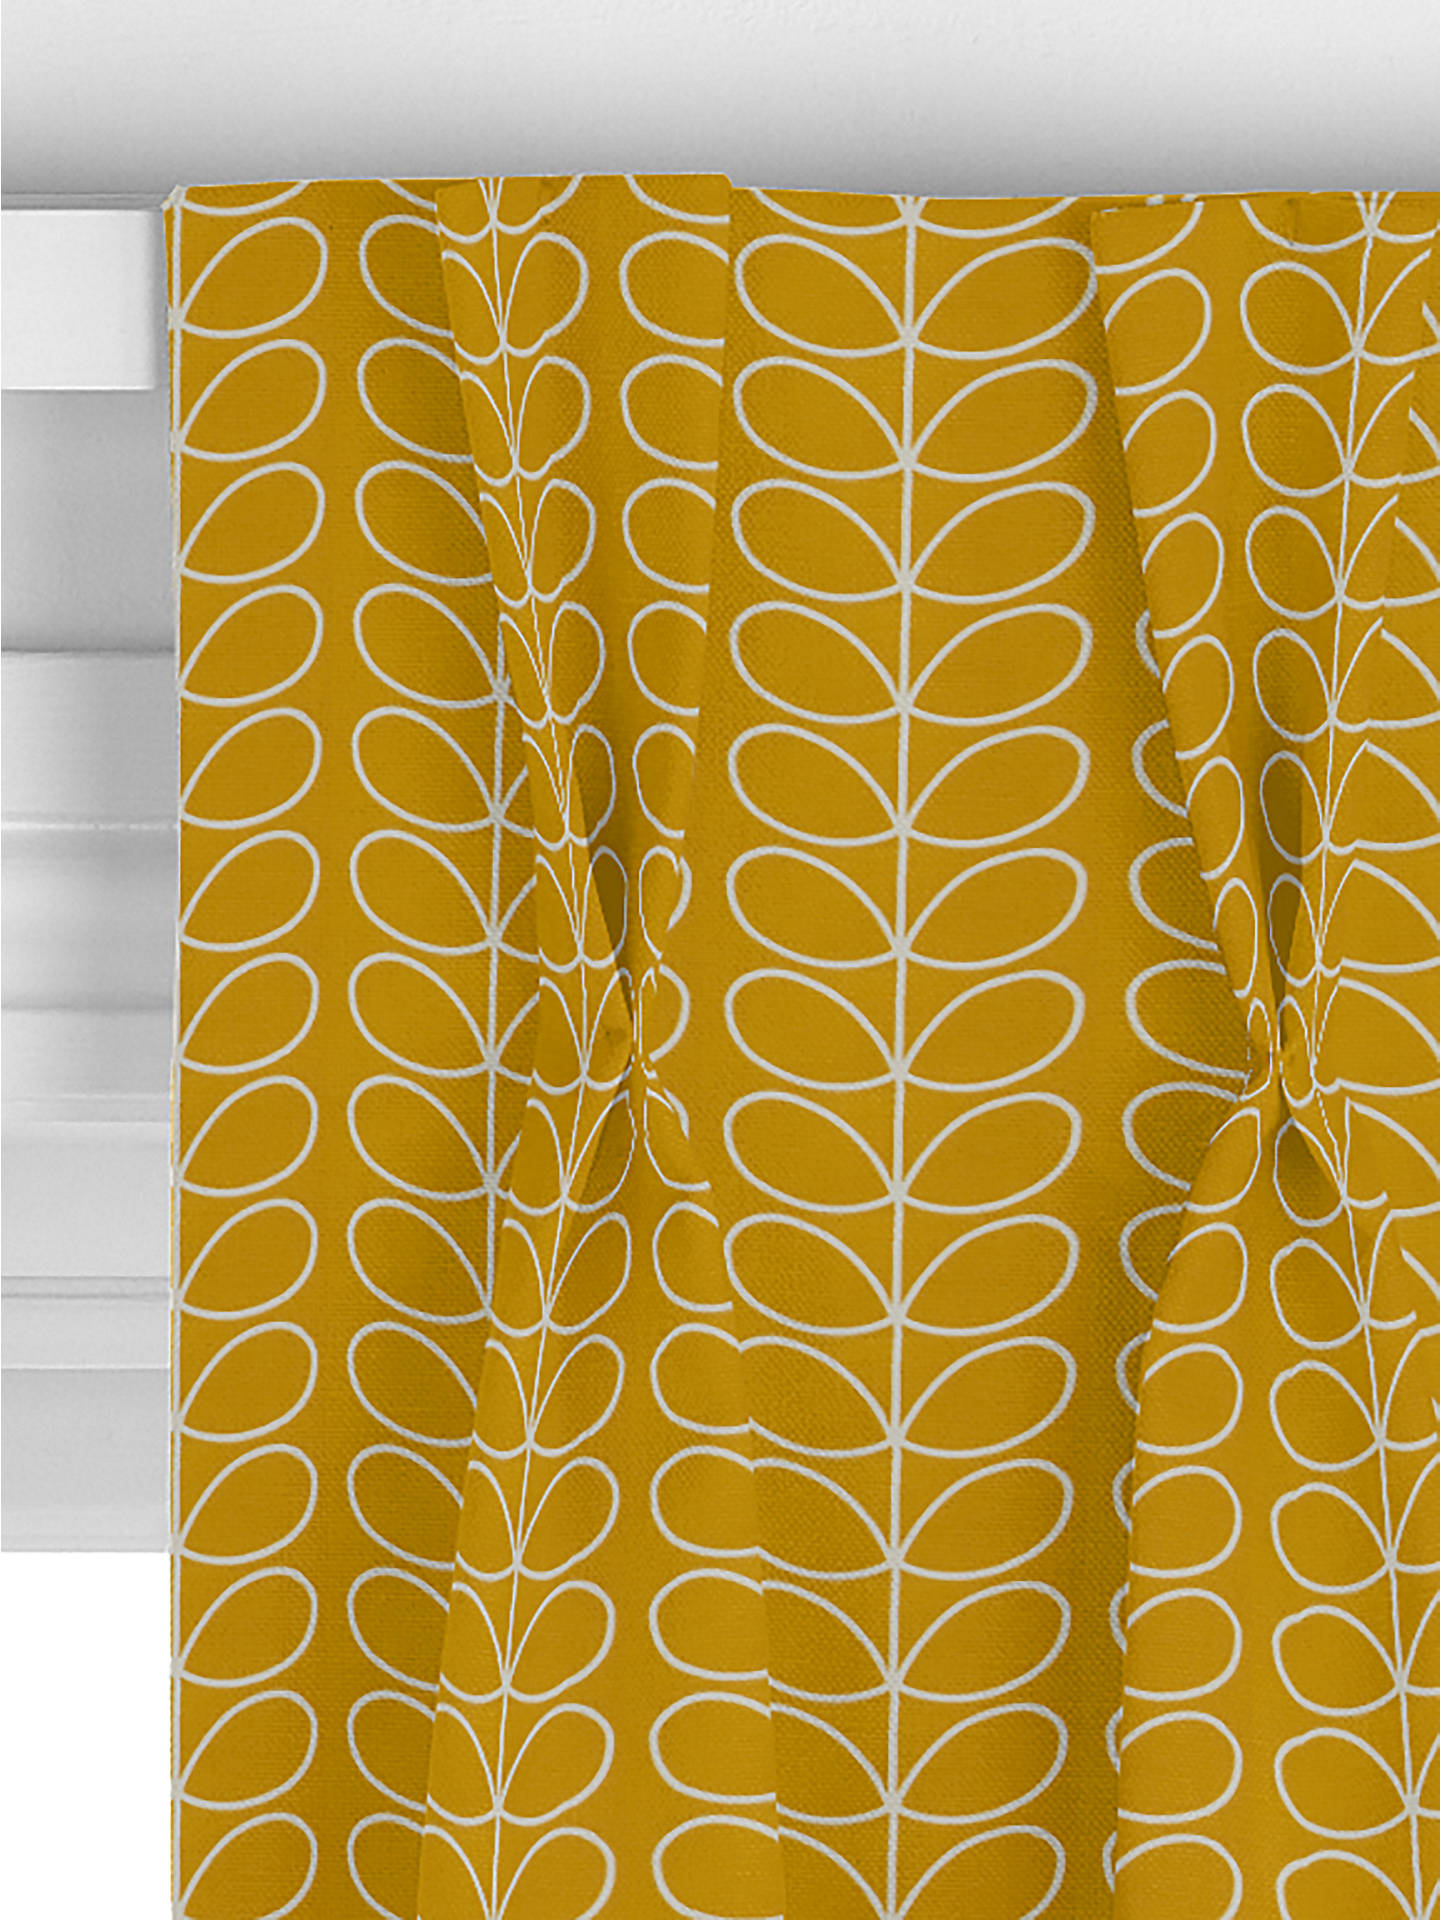 Orla Kiely Linear Stem Made to Measure Curtains, Dandelion